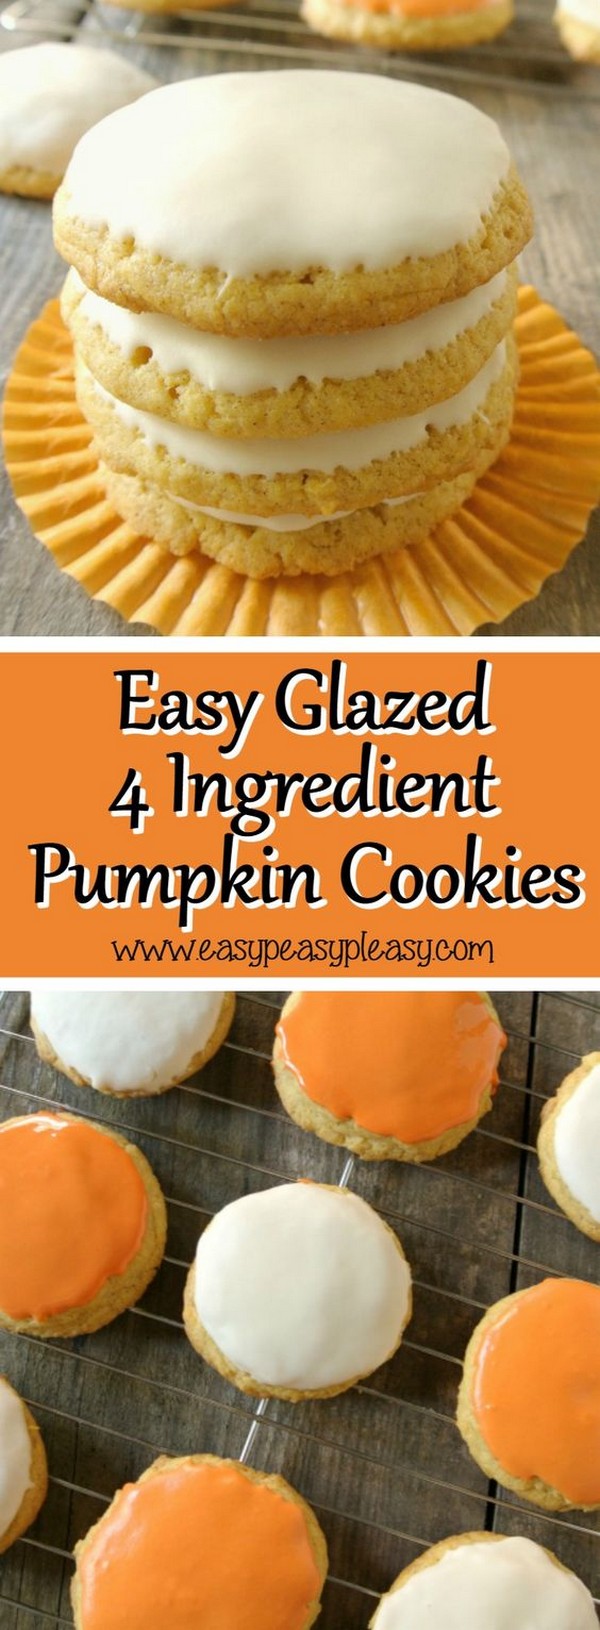 Easy Glazed 4 Ingredient Pumpkin Cookies